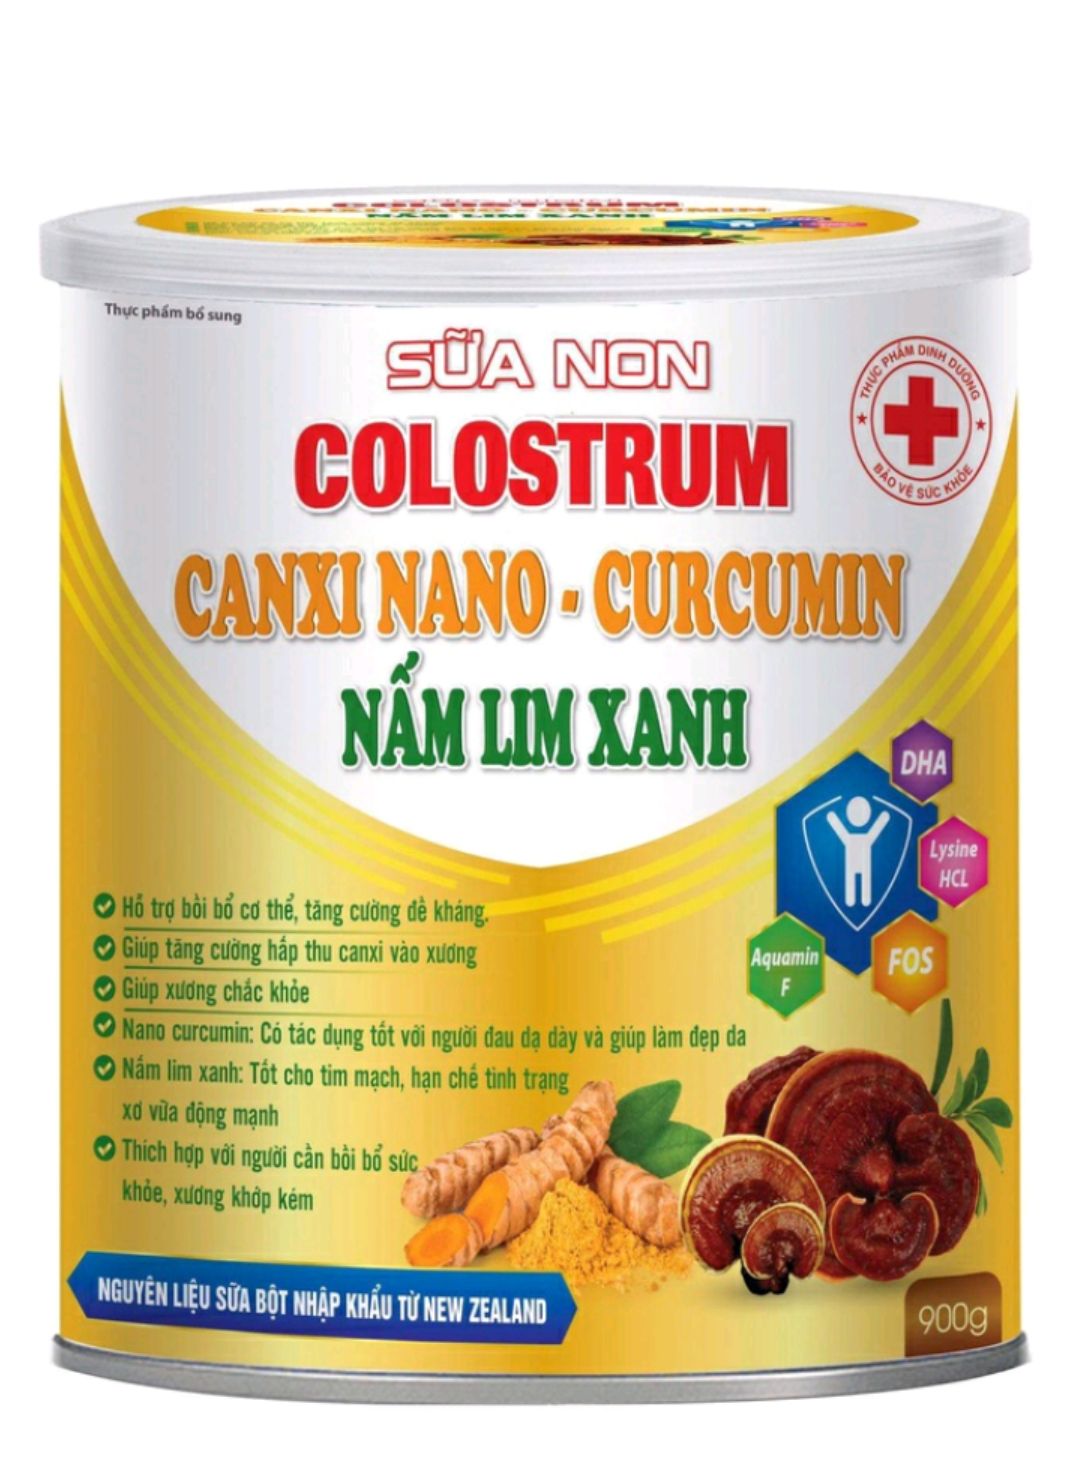 900gr, Date T3.2024 Sữa non Colostrum- Canxi nano- Curcumin- Nấm Lim xanh